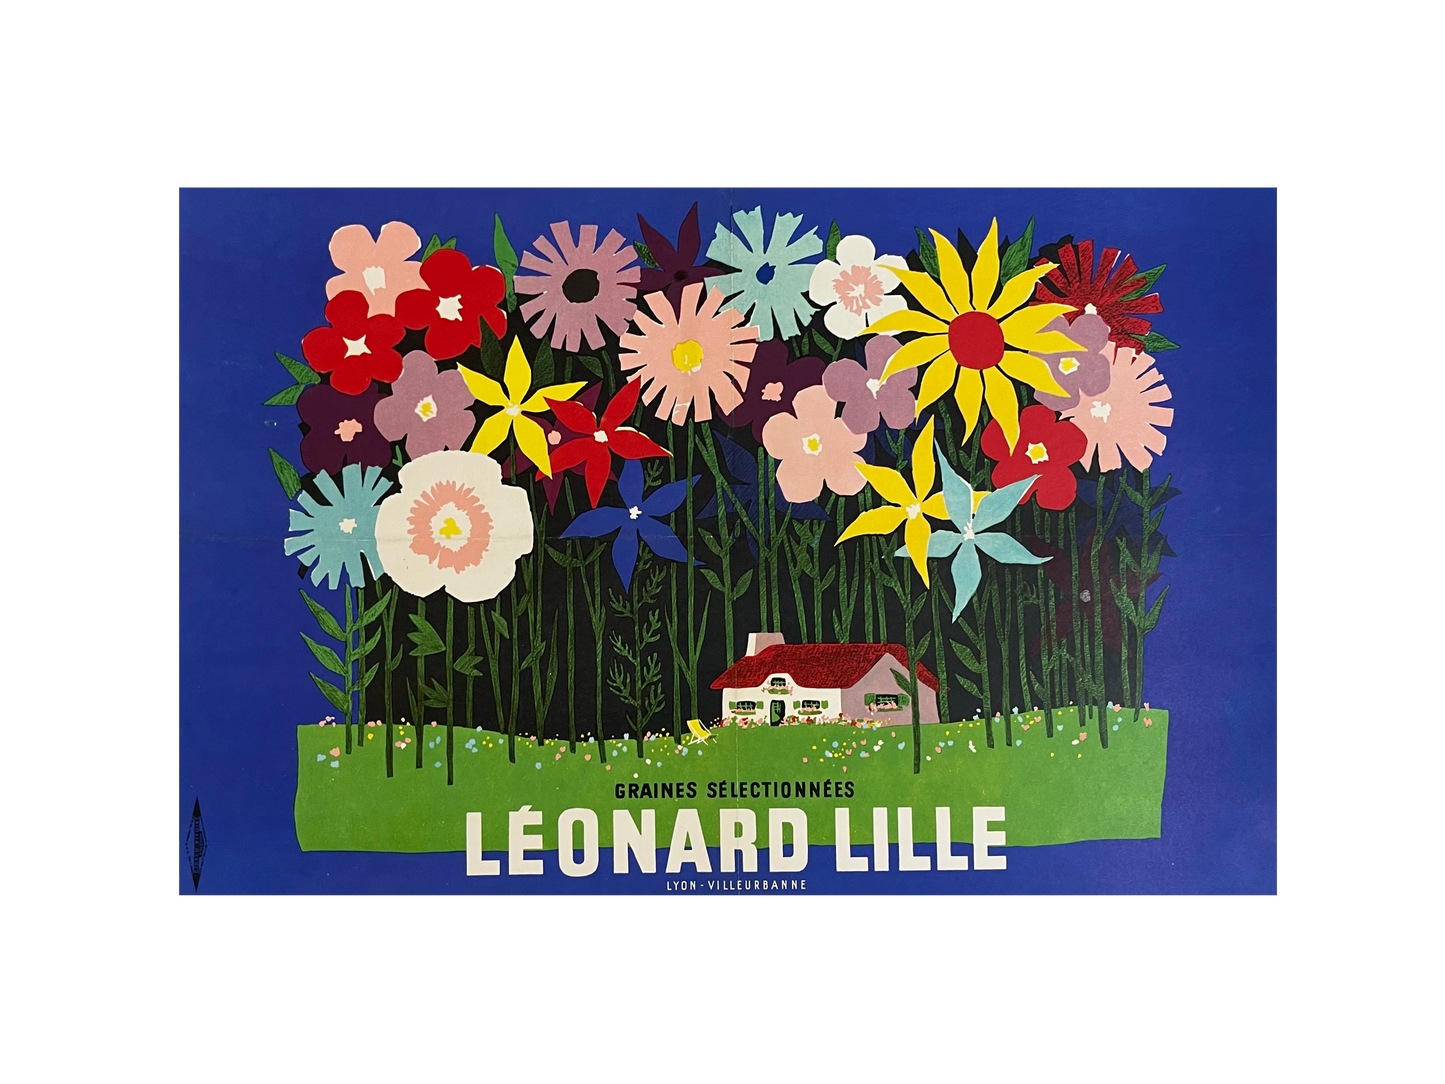 Leonard Lille Garden